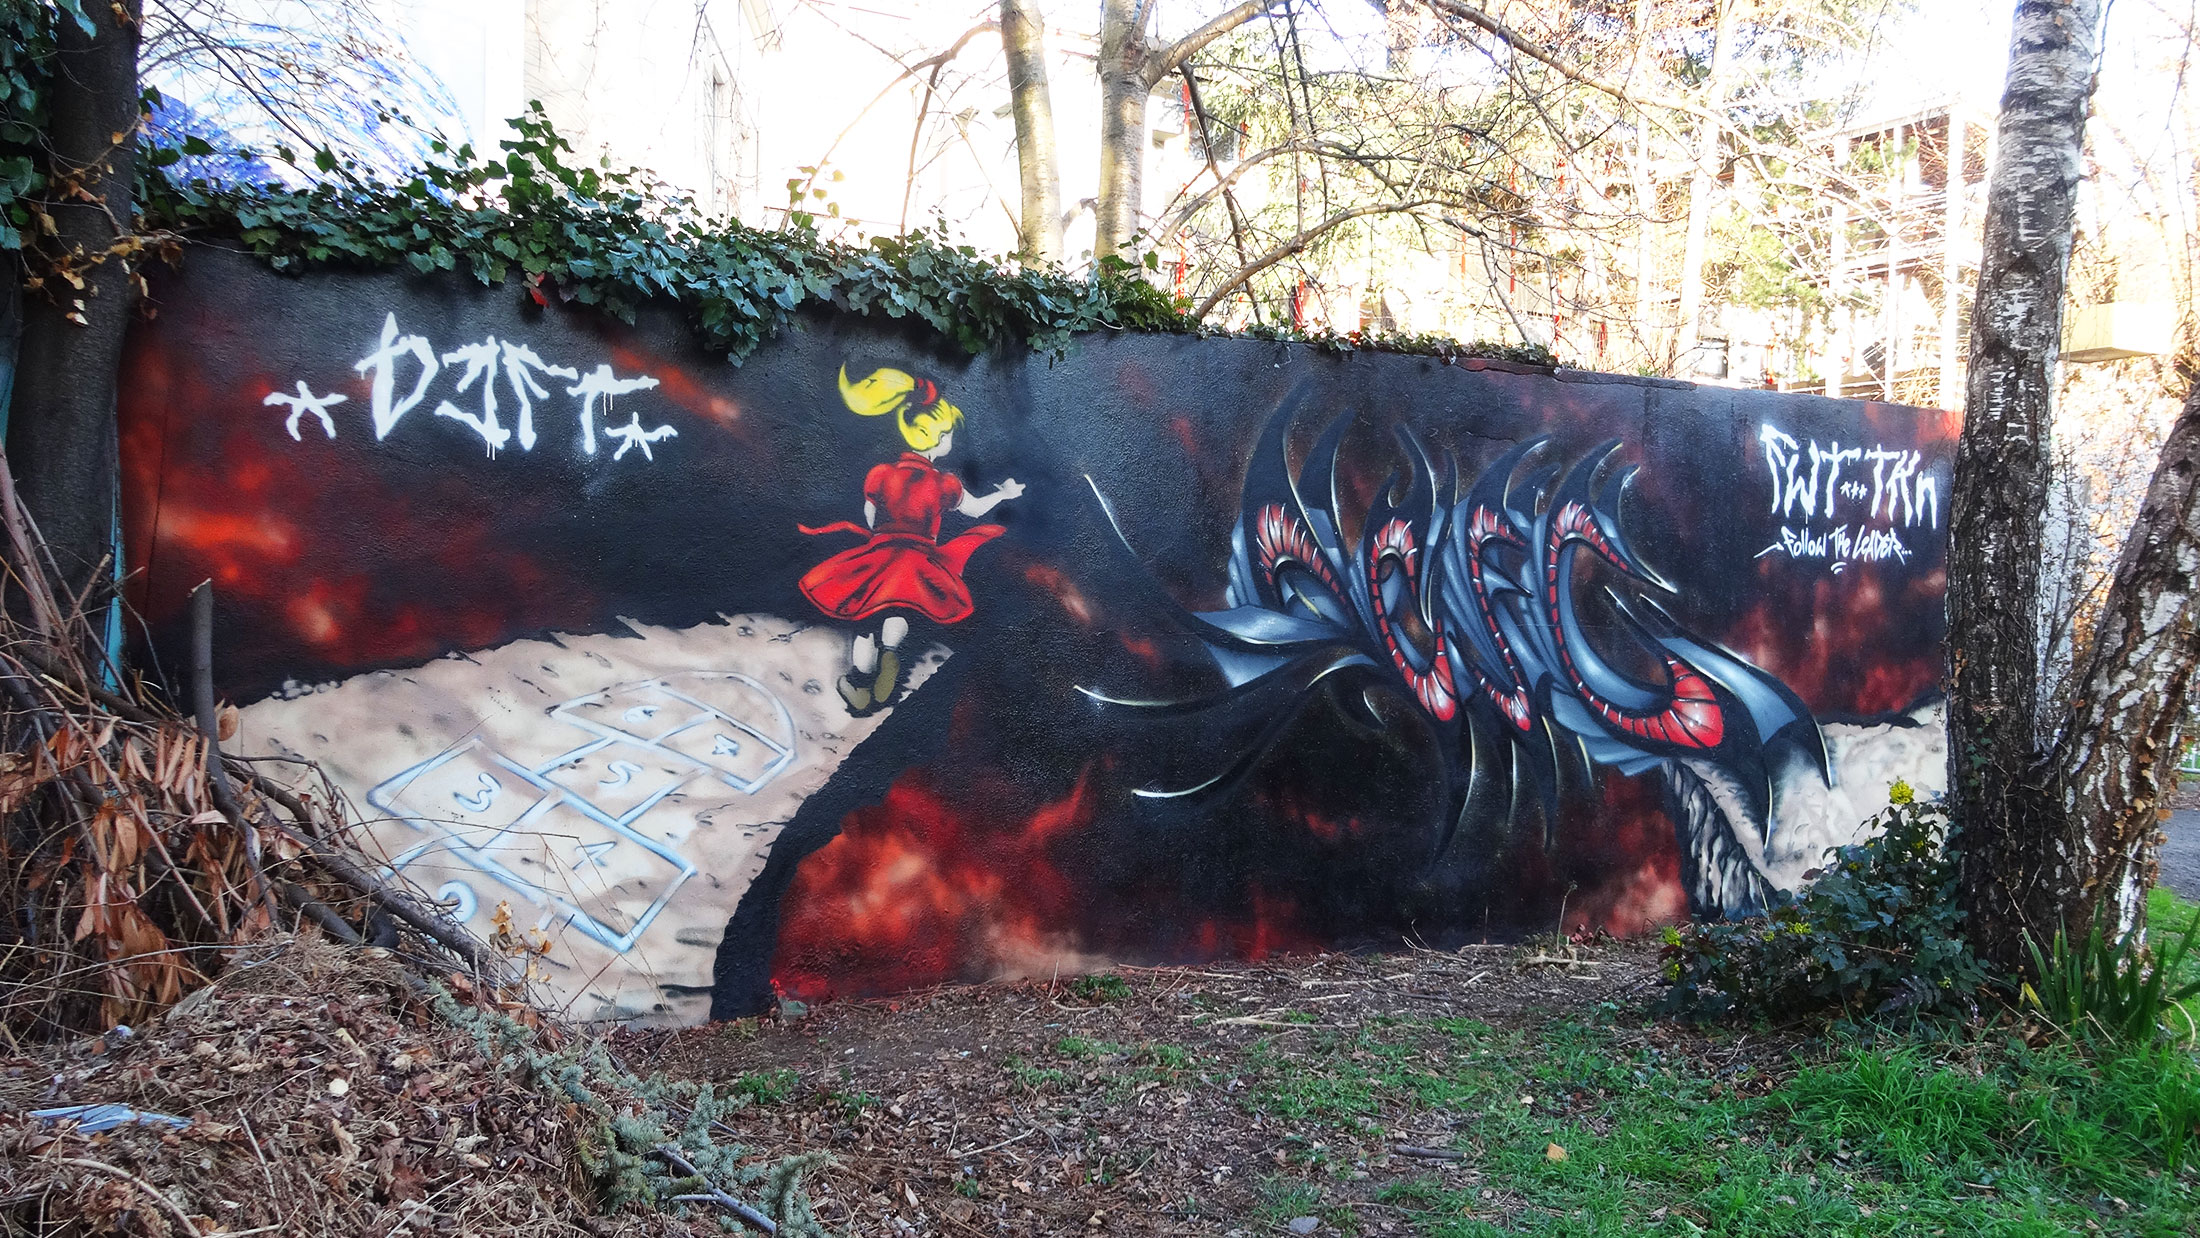 follow the leader - korn - Graffiti